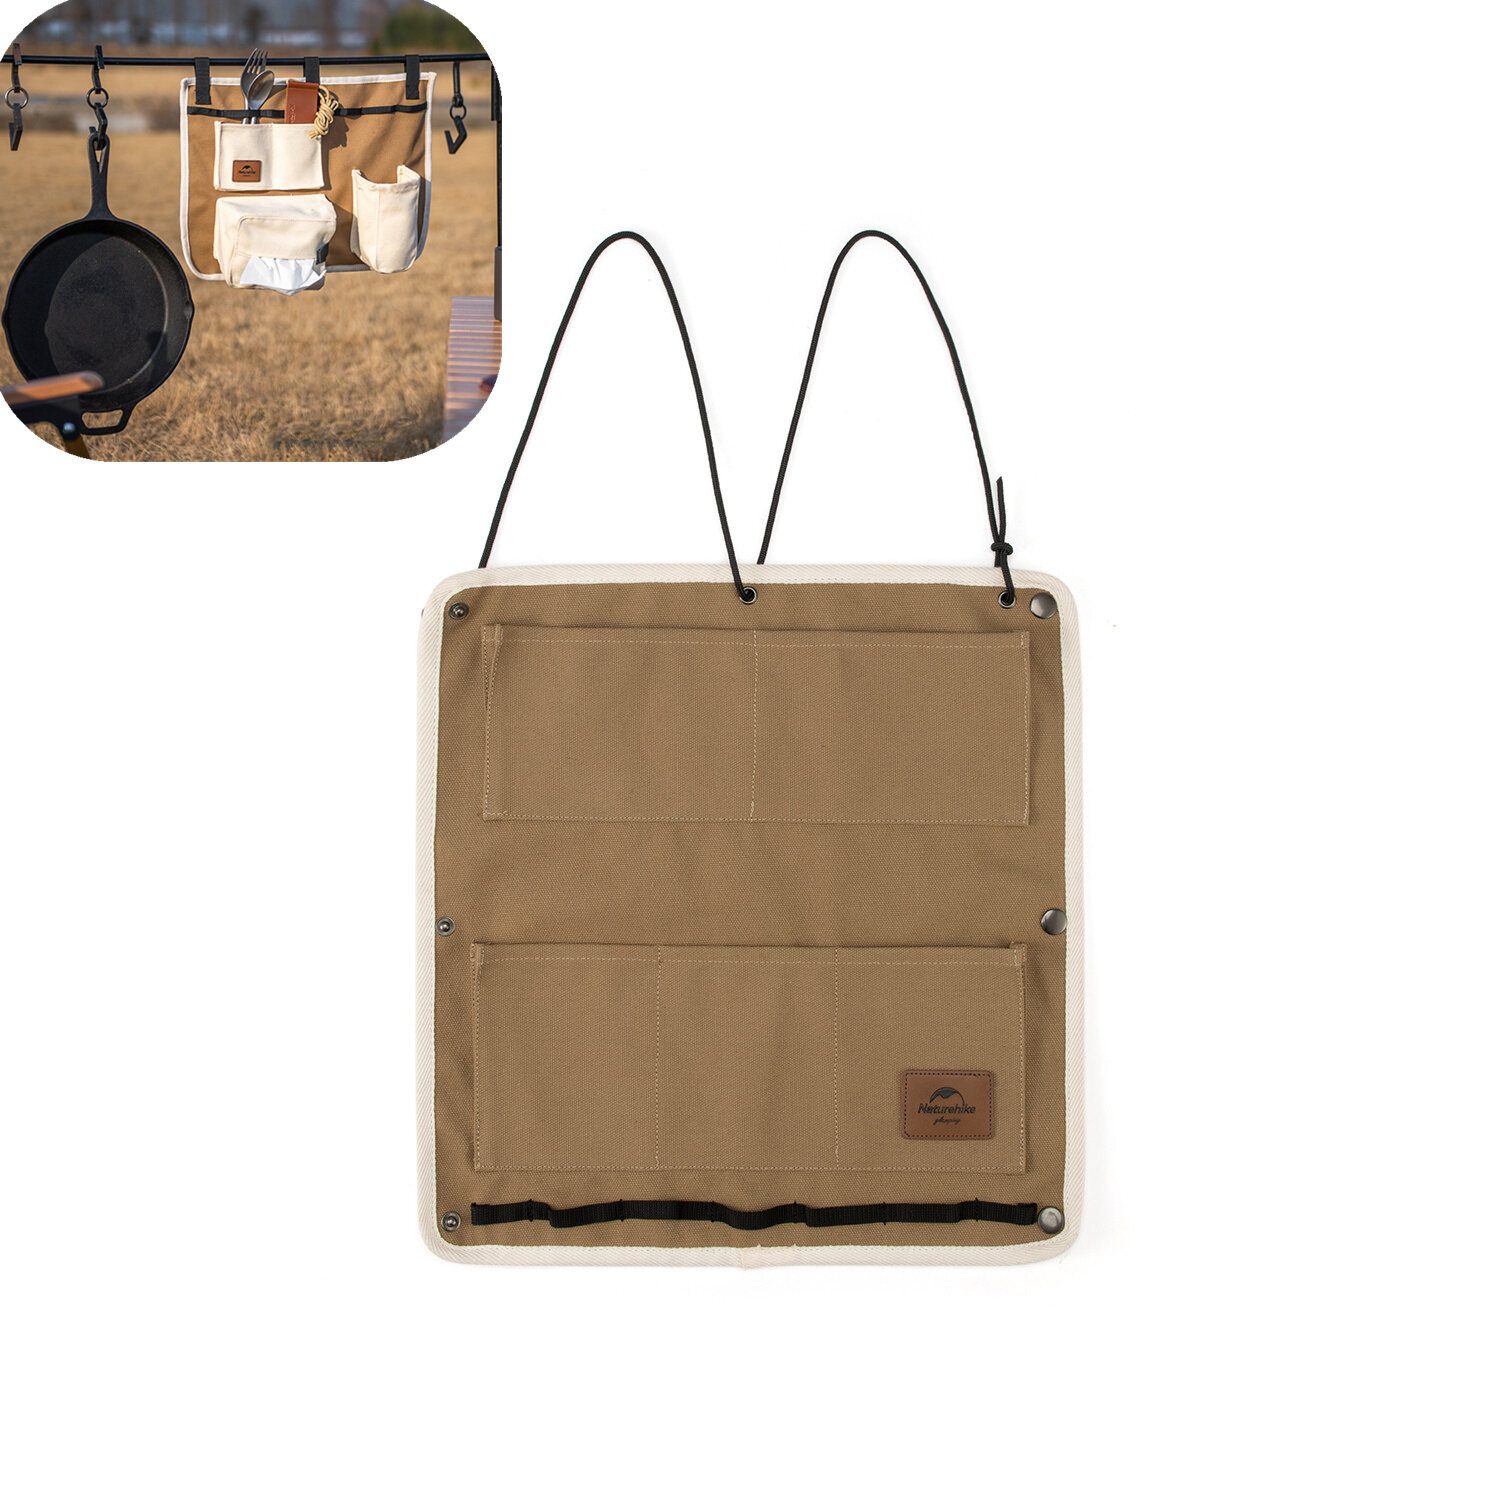 Рюкзак с множеством карманов Naturehike для кемпинга, хранения на тележке, холстяная сумка для пикника, готовки на гриле.